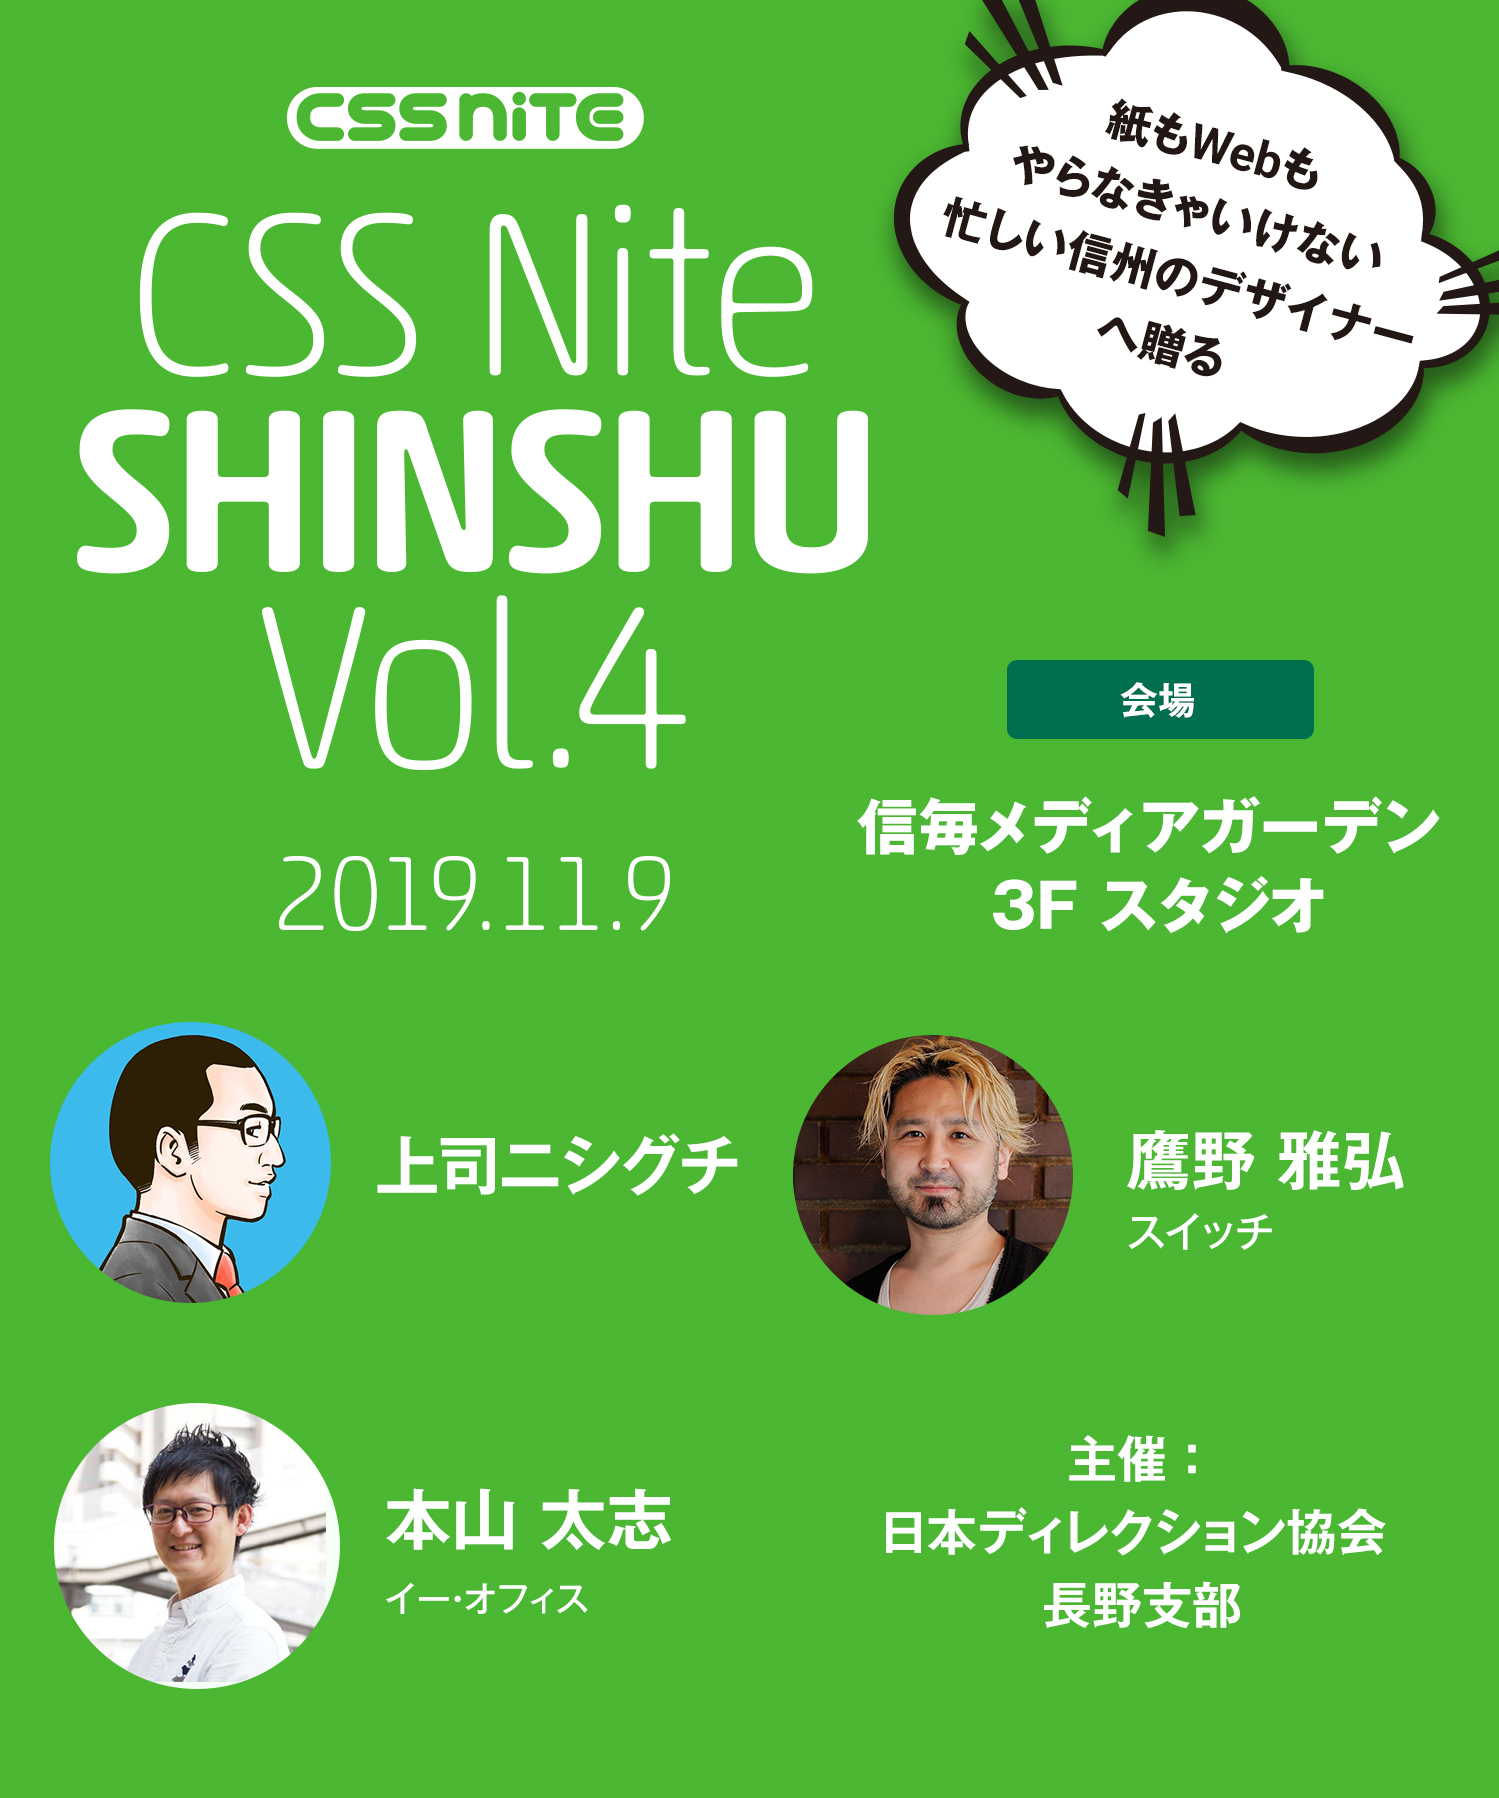 CSS Nite Shinshu vol.4メインイメージ